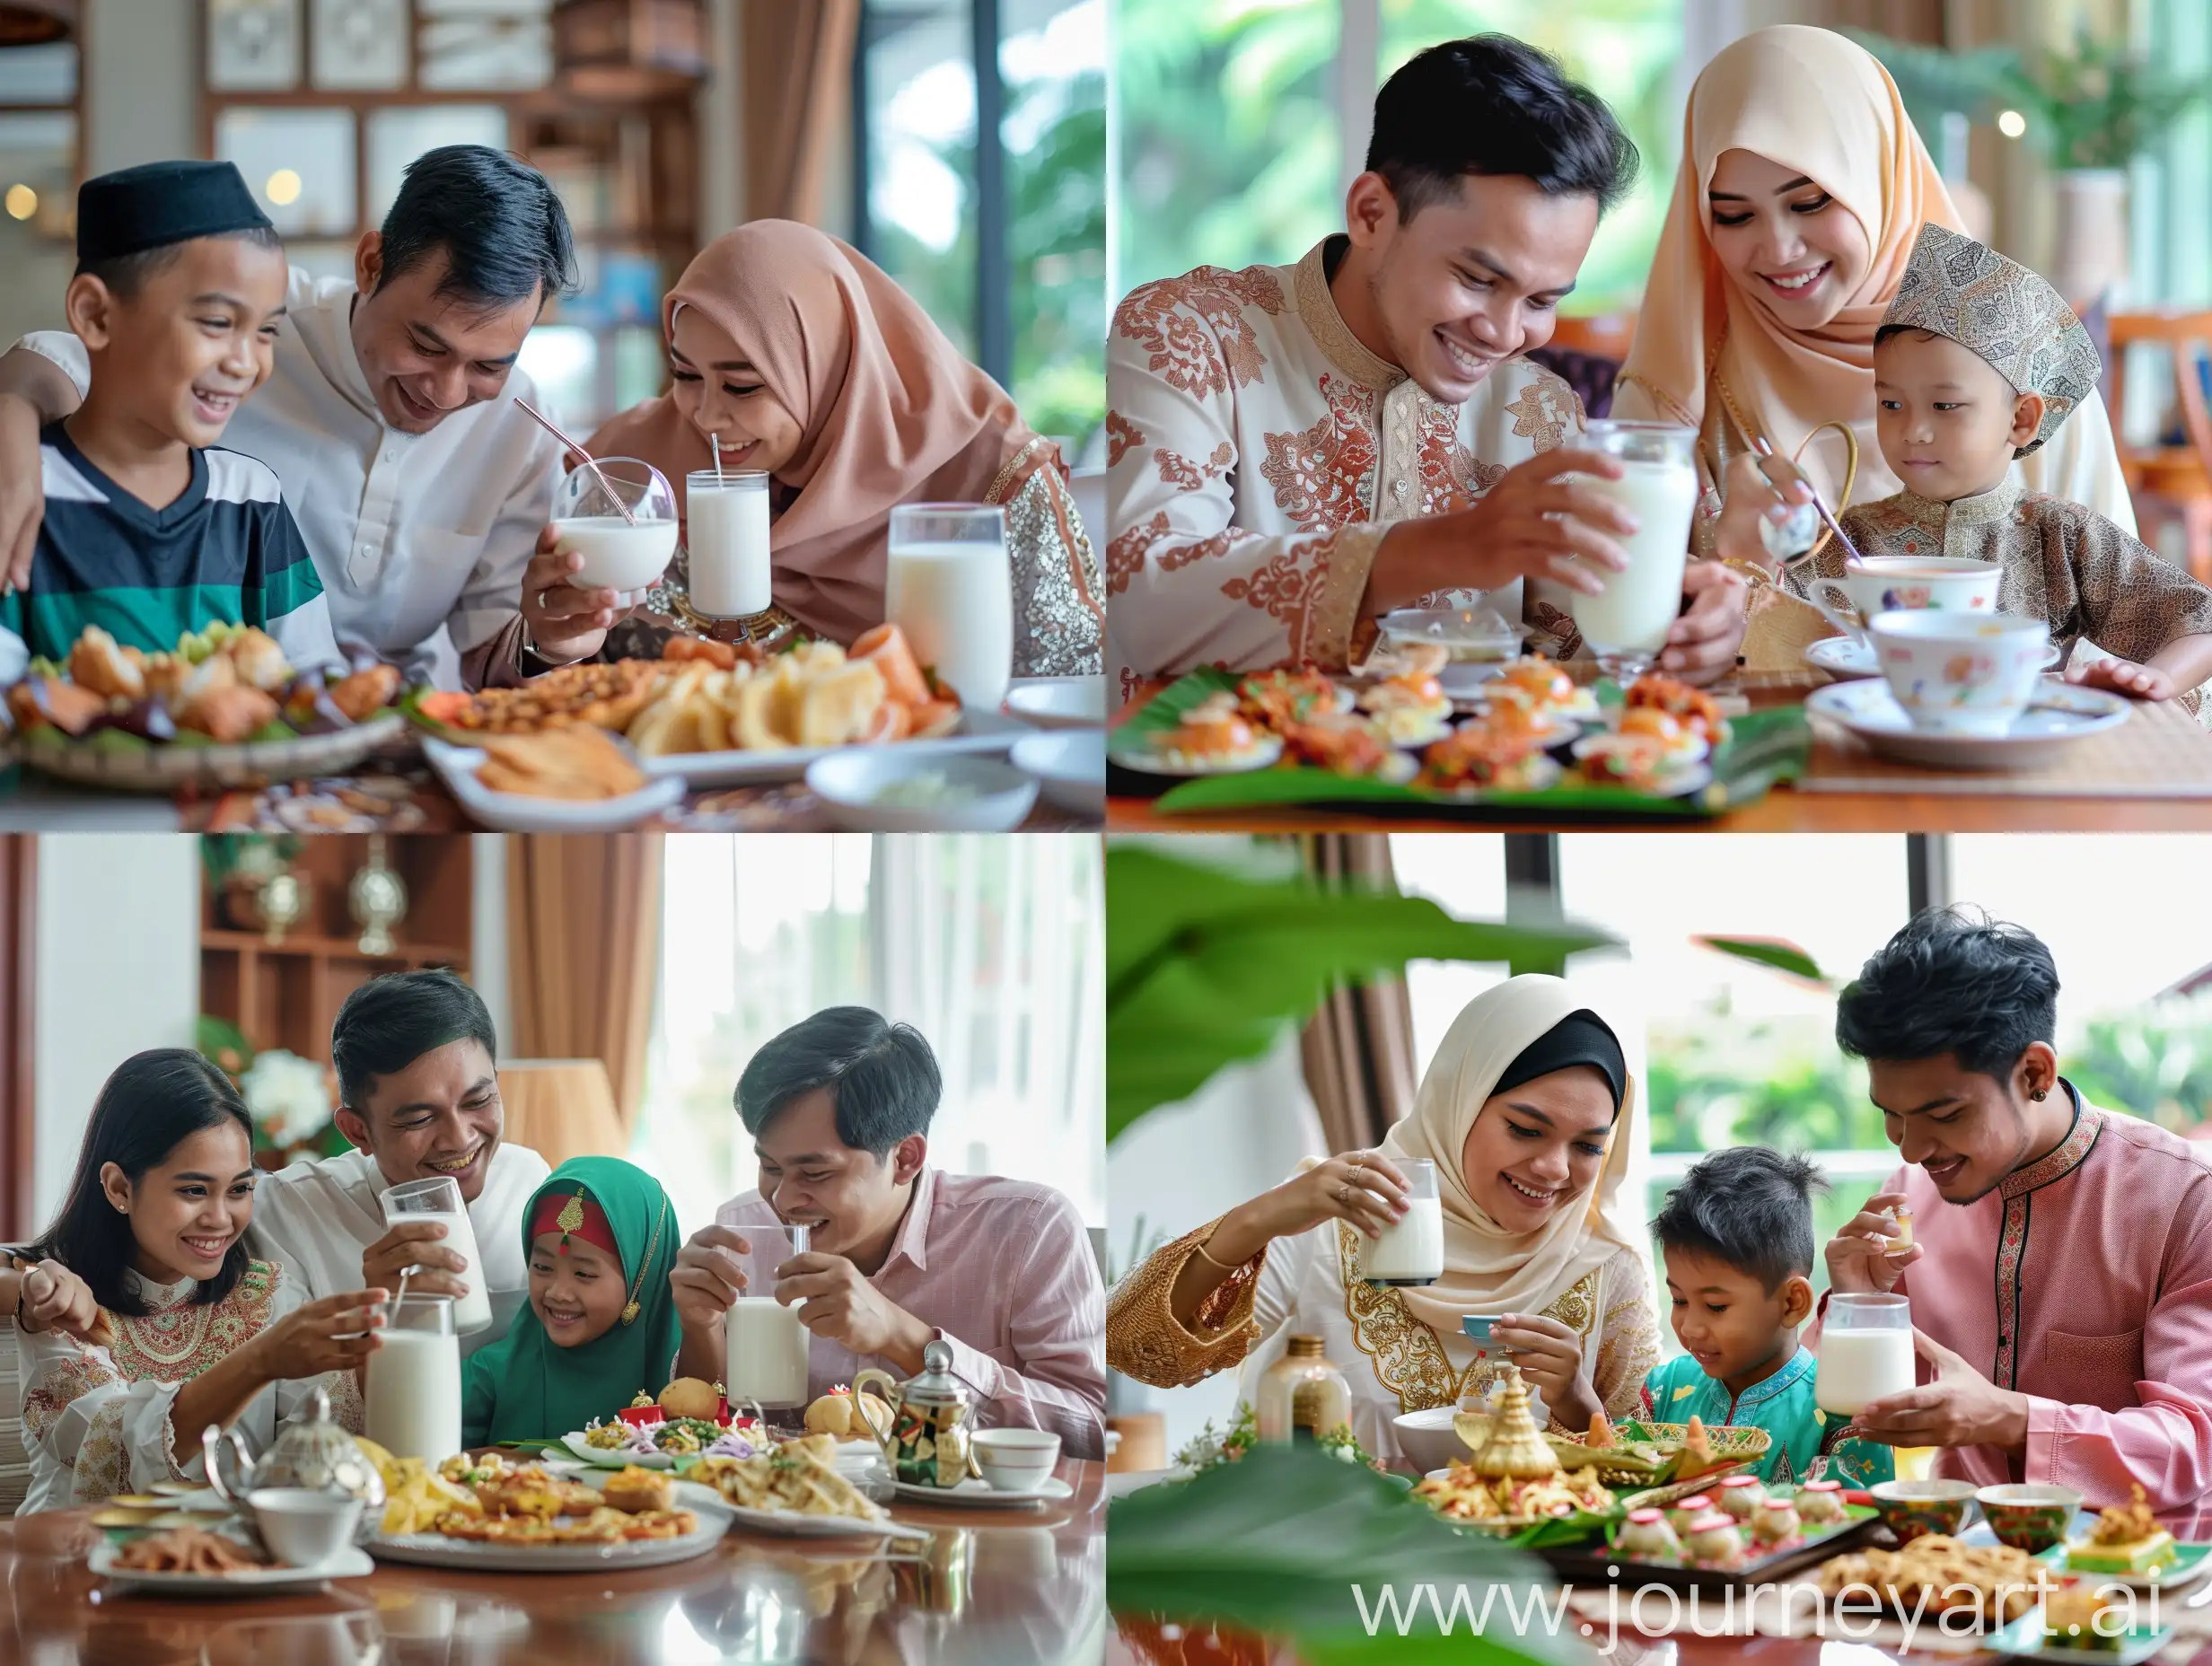 Muslim-Family-Enjoying-Hari-Raya-with-Traditional-Appetizers-and-Milk